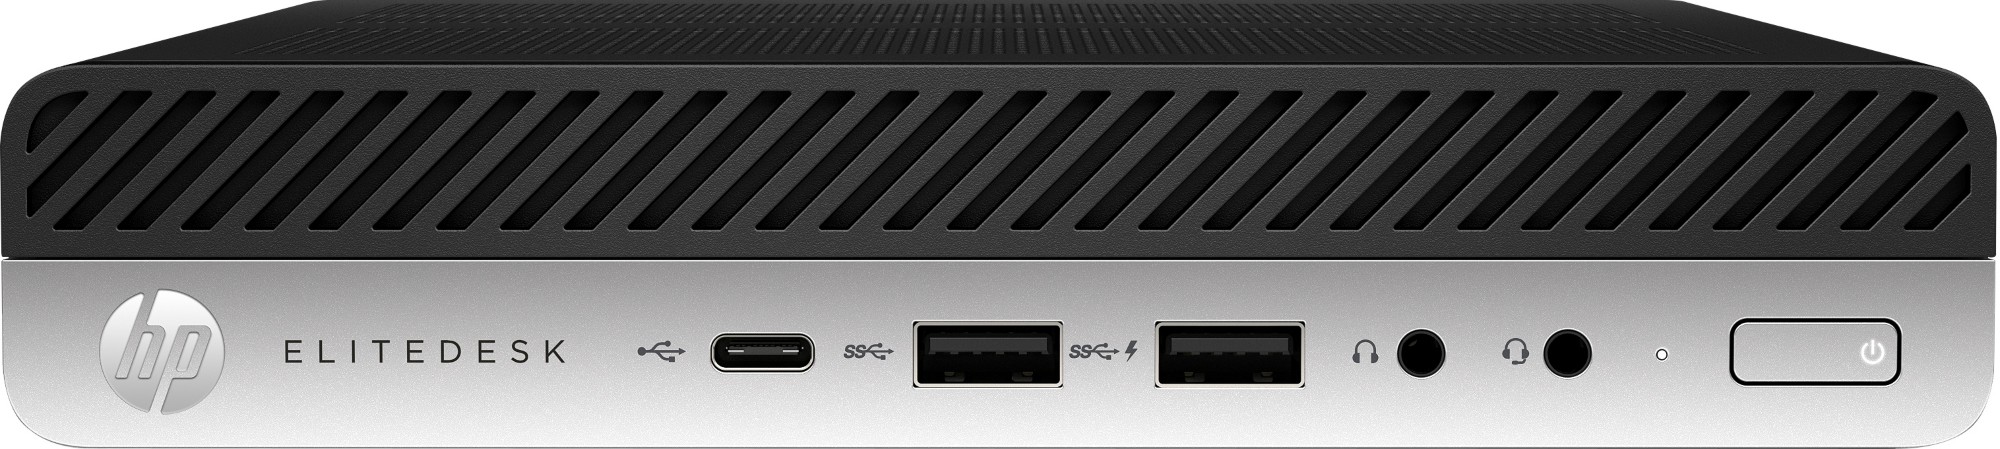 HP EliteDesk 800 G4 Home and Business Desktop Black (Intel i7-8700T 6-Core, 8GB RAM, 512GB SATA SSD, Intel UHD 630, Wifi, Bluetooth, 3xUSB 3.1, 3 Display Port (DP), Win 10 Pro) - image 1 of 4